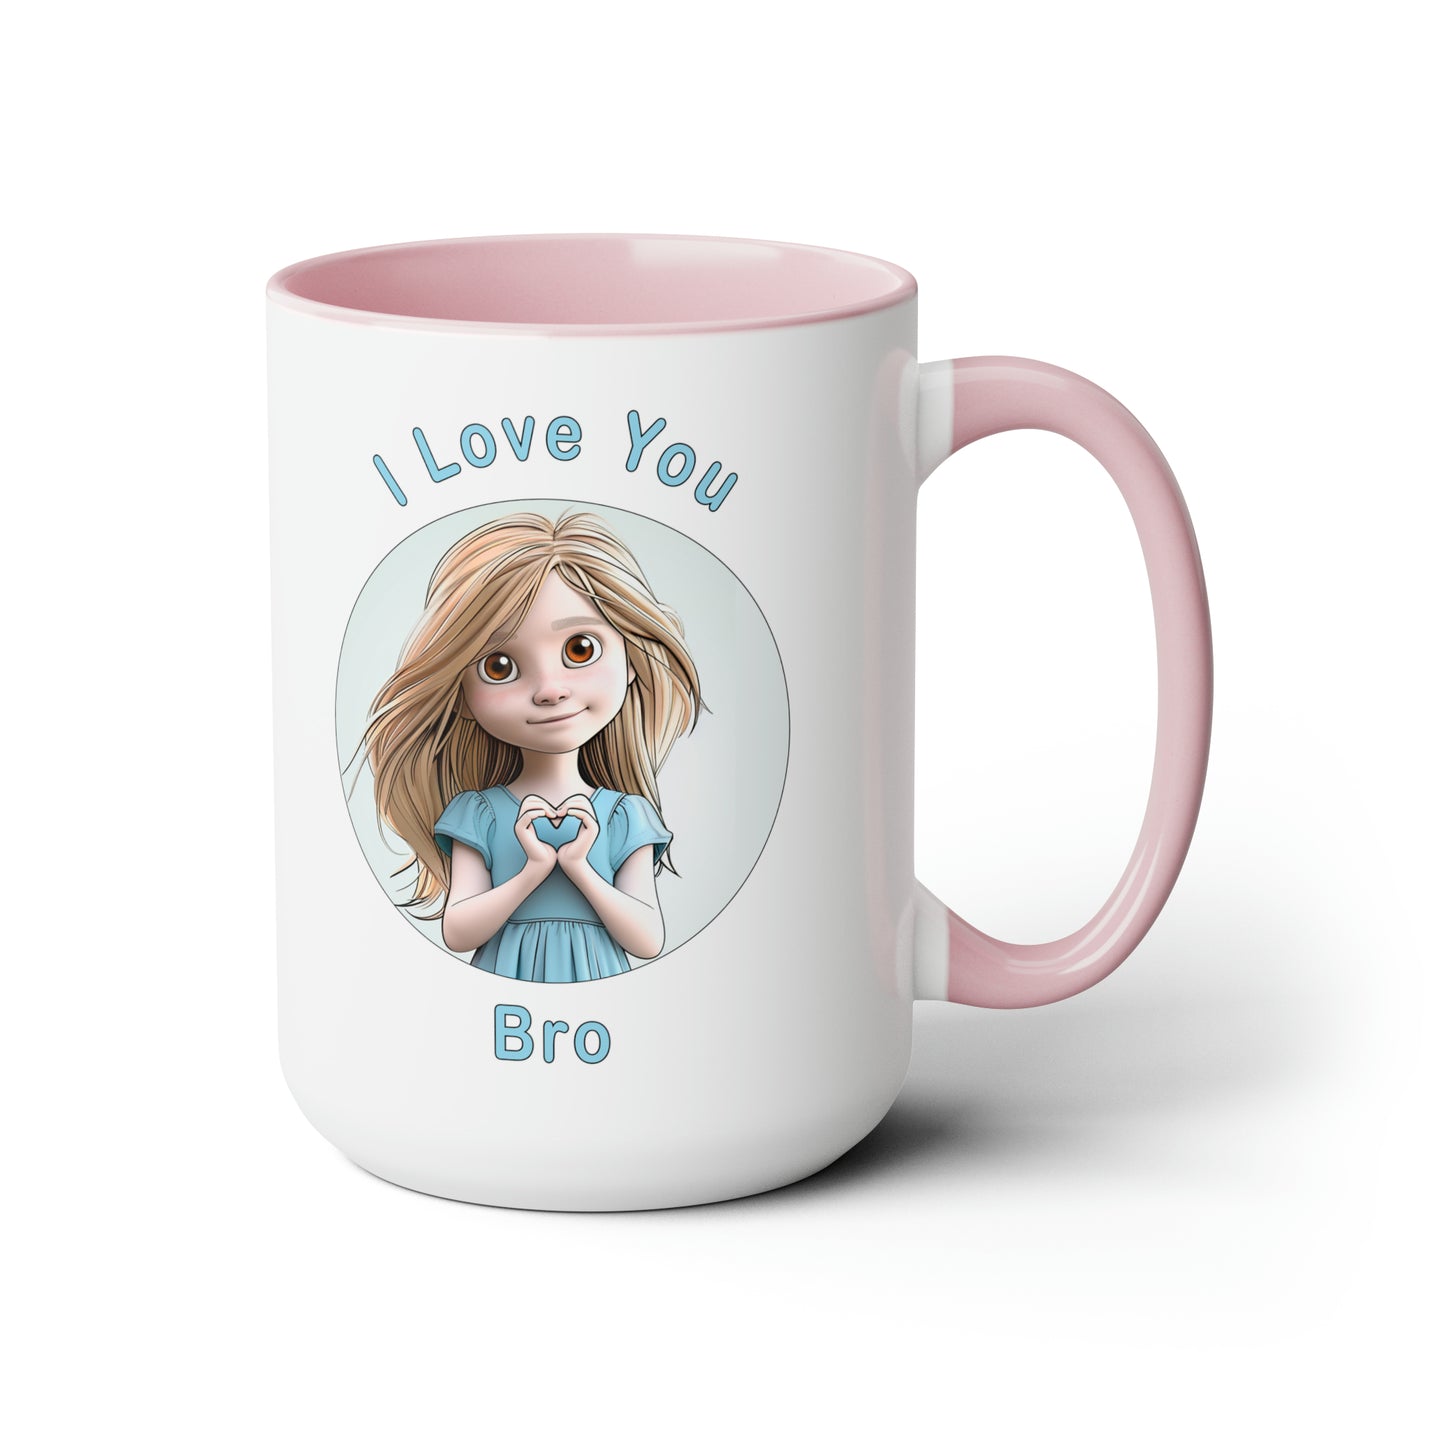 I Love You Bro, Two-Tone Coffee Mugs, 15oz